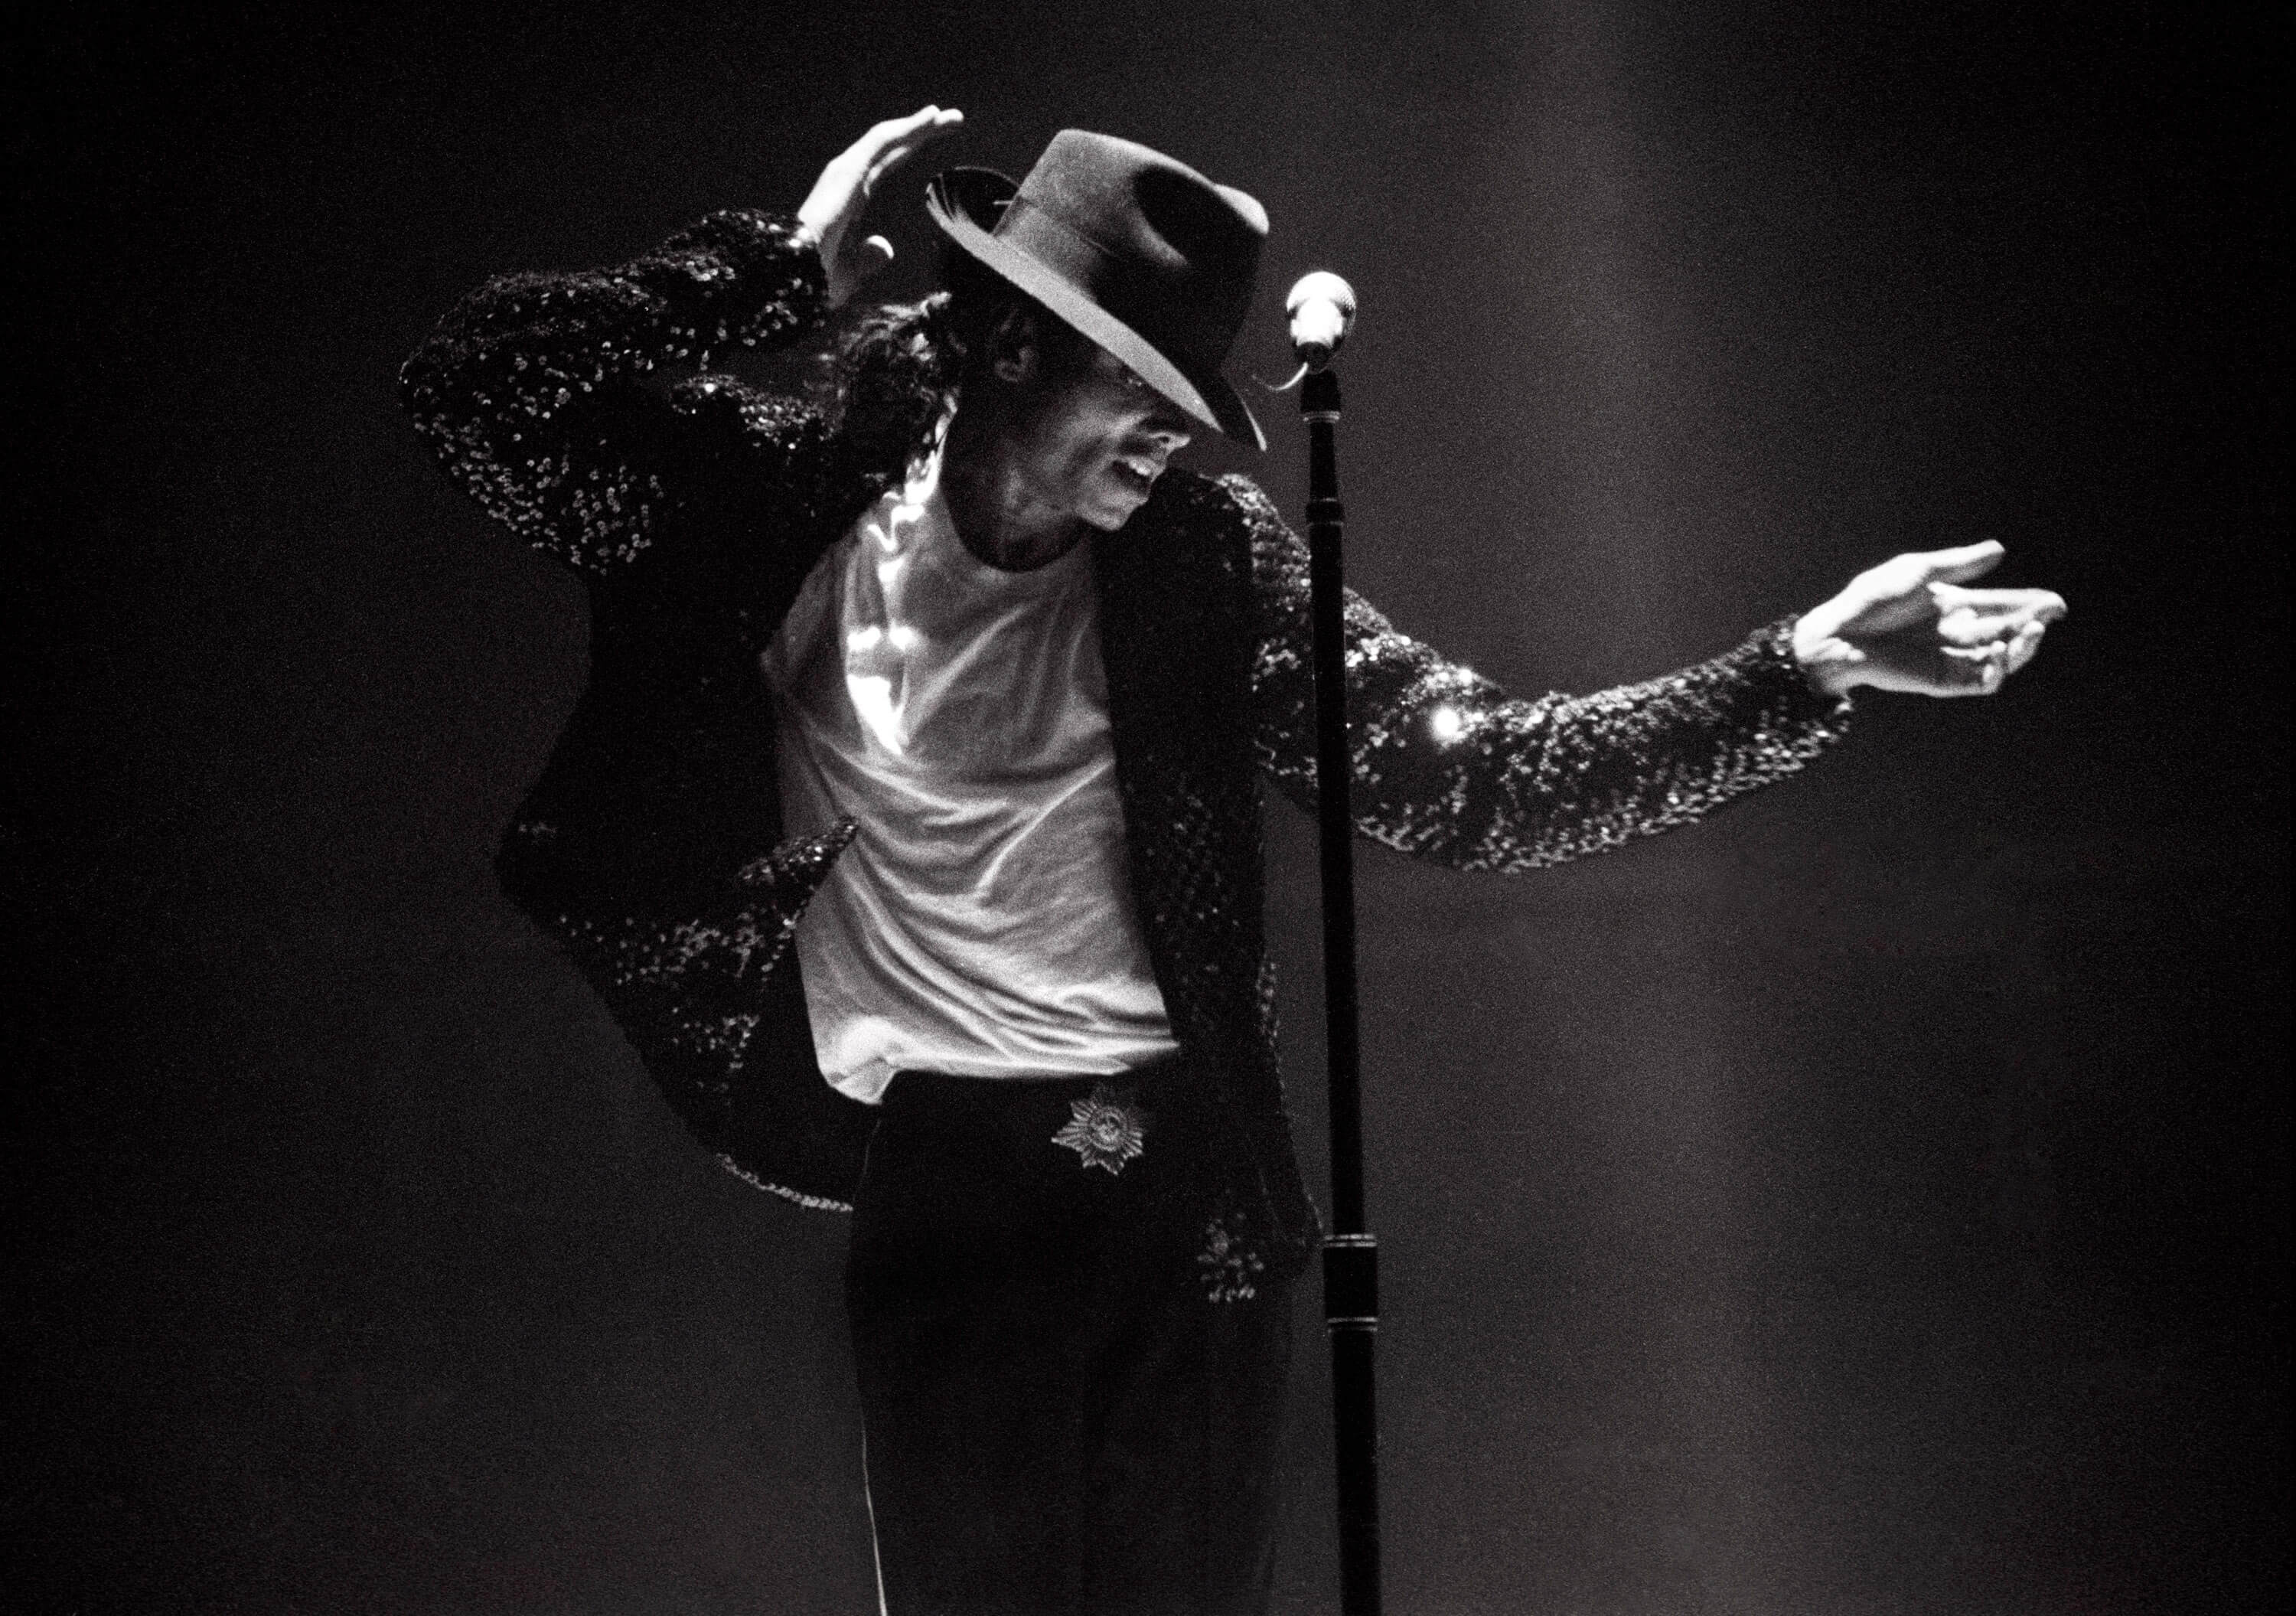 "Thriller" singer Michael Jackson in a fedora